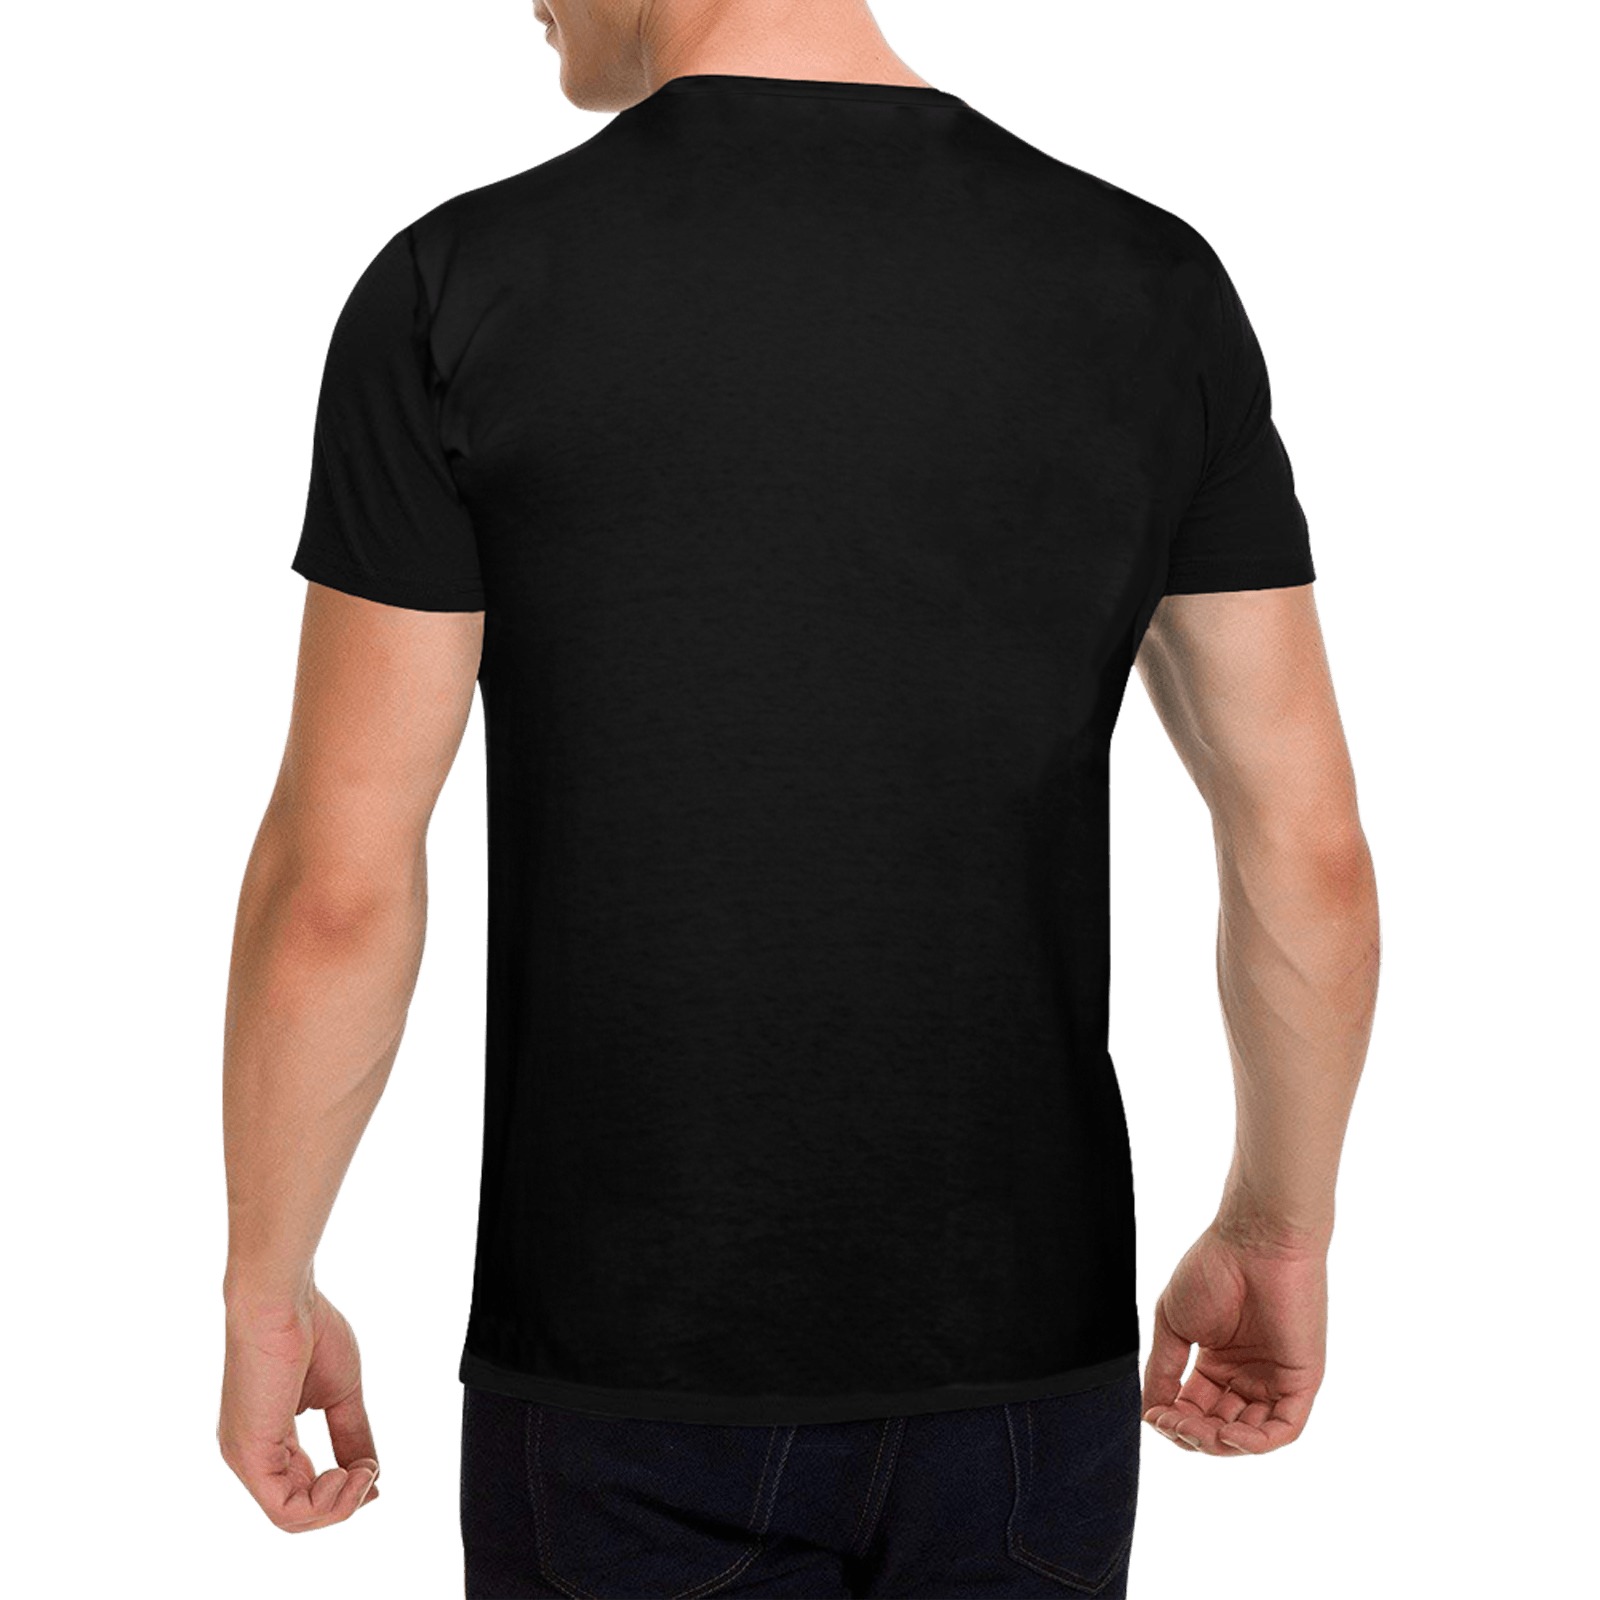 LOSTBOYZINTHEHOOD (2) Men's Heavy Cotton T-Shirt (One Side Printing)